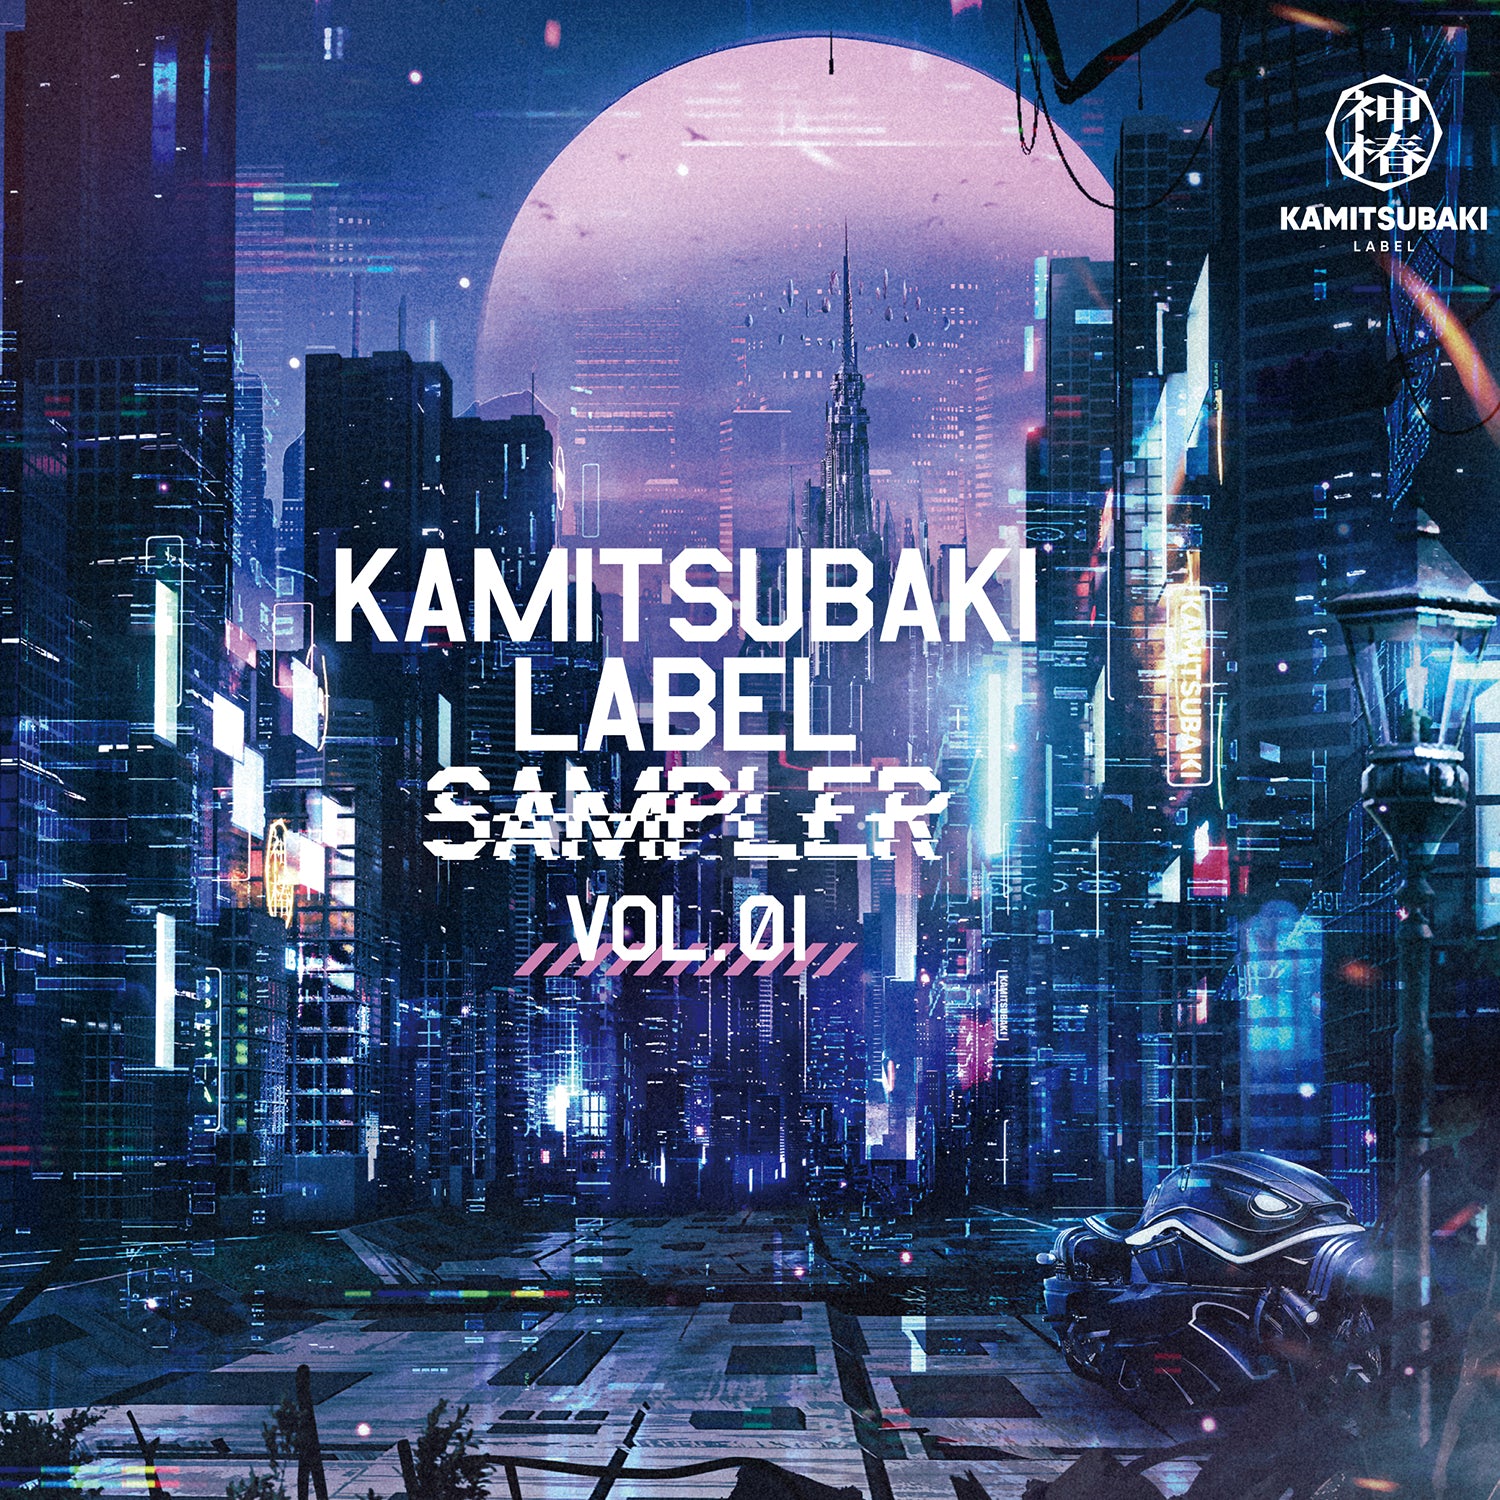 【KAMITSUBAKI STUDIO】Various Artists Compilation Album 「KAMITSUBAKI LABEL  SAMPLER Vol. 1」／コミックマーケット103出展記念グッズ